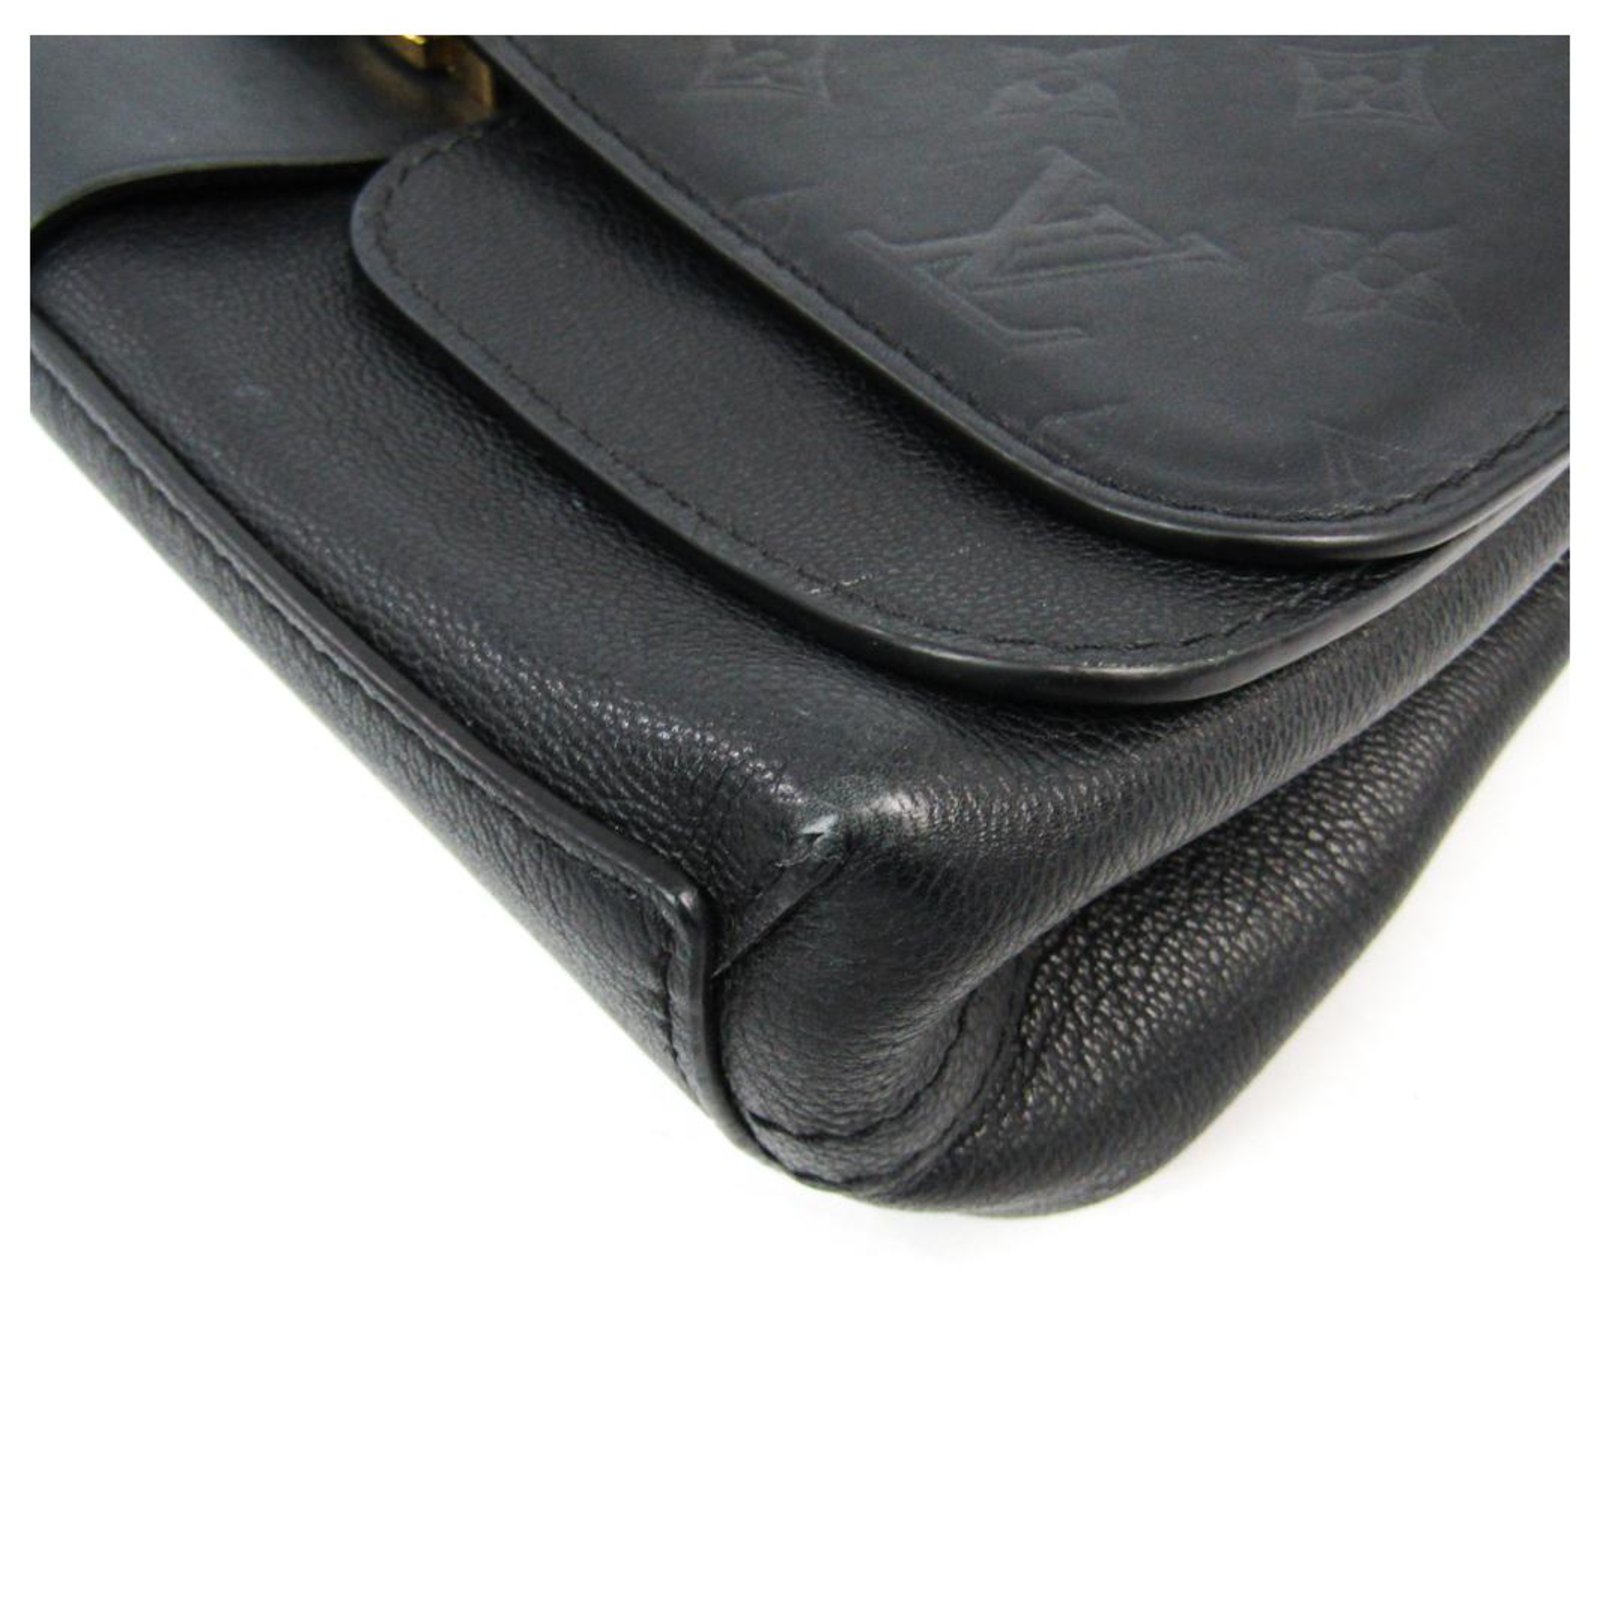 LOUIS VUITTON Very Chain Shoulder Bag M43201